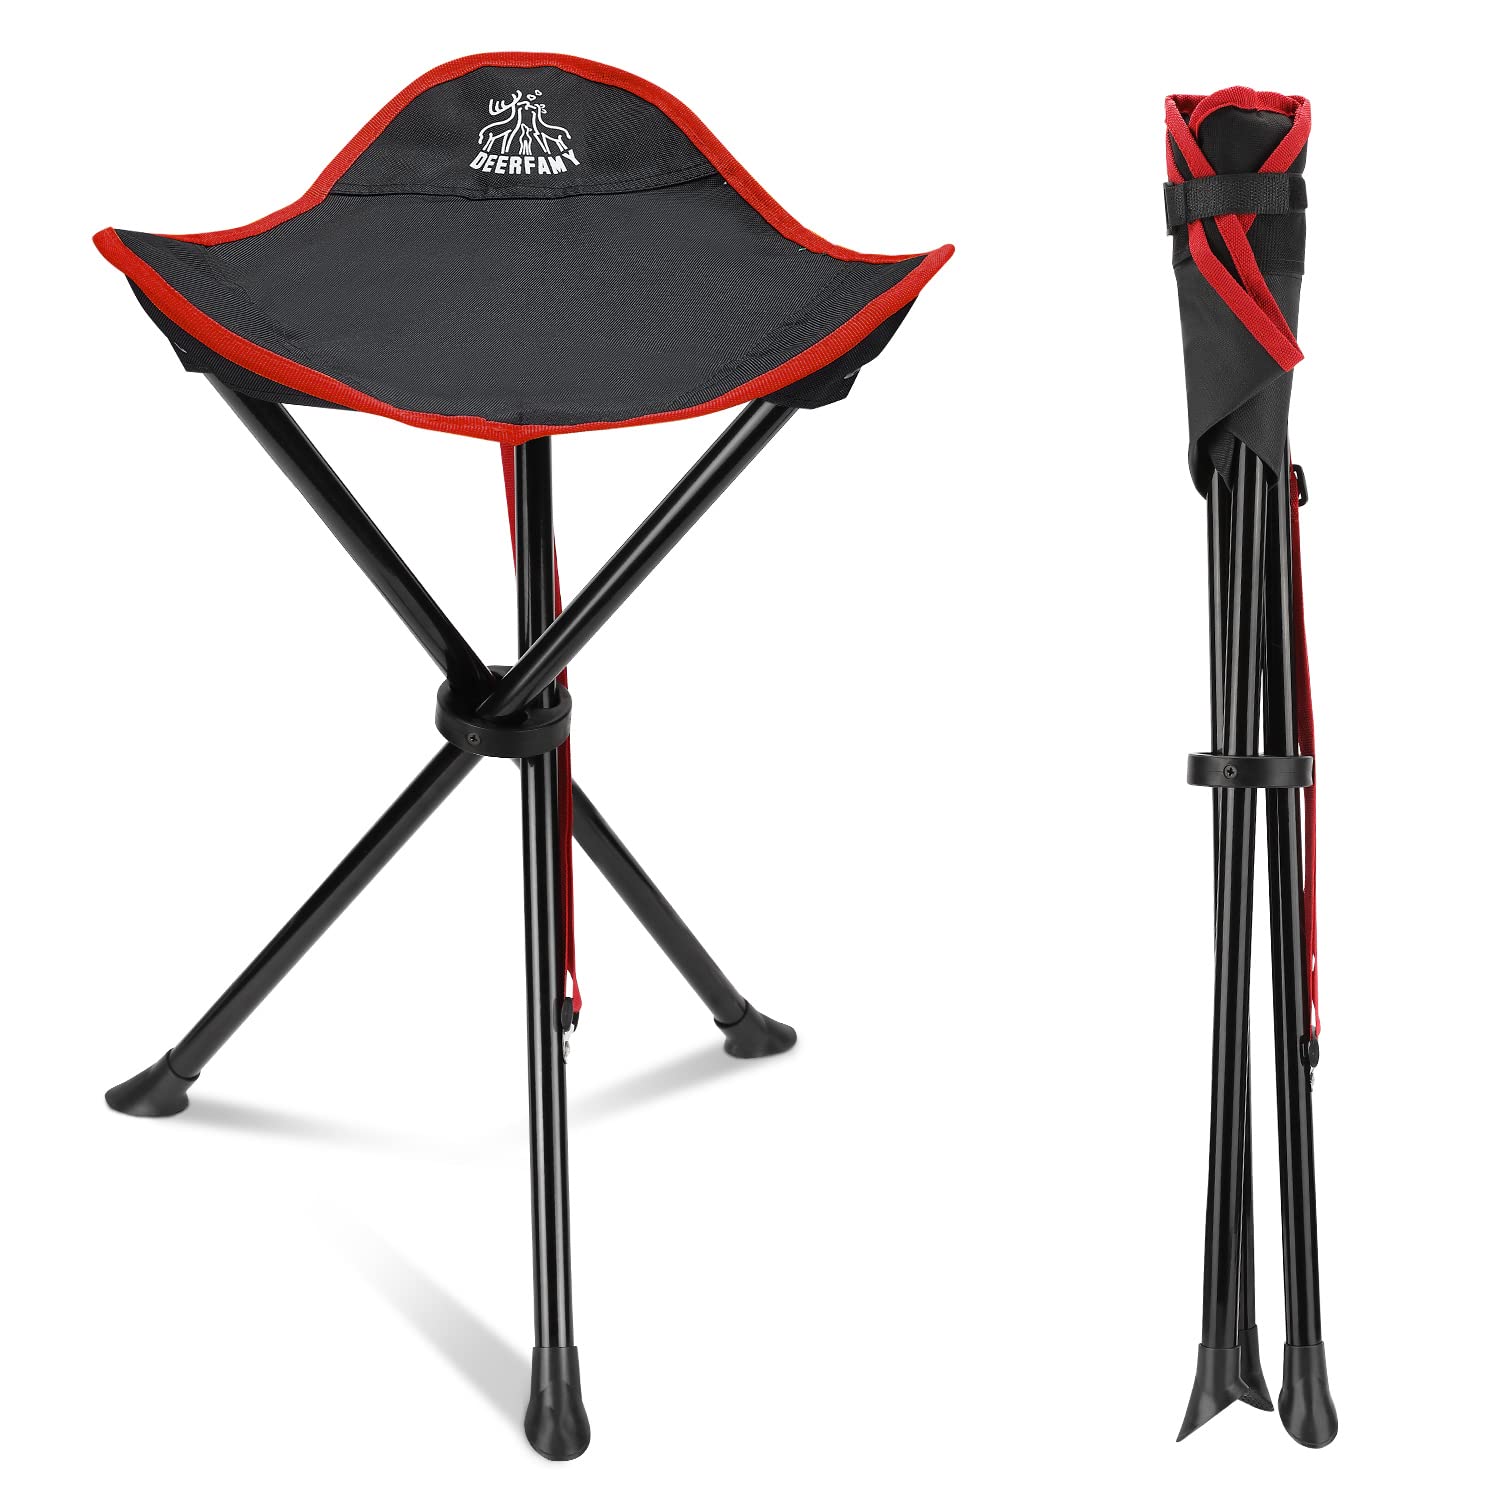 Deerfamy Folding Camping Tripod Stools, Portable 3 Legs Tall Slacker Chair Tripod Seat For Outdoor Hiking Hunting Fishing Picnic